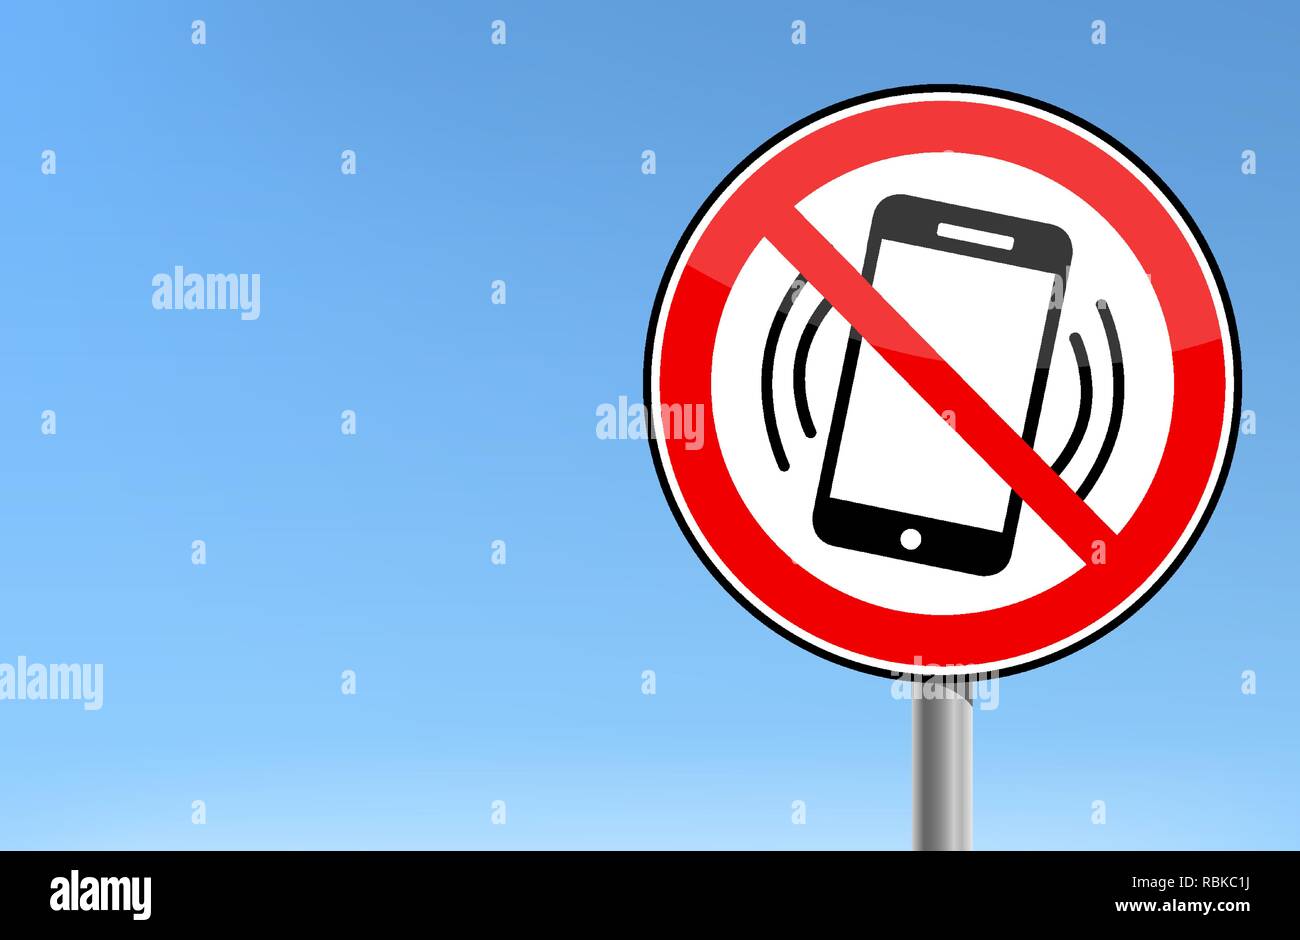 No cell phone - Mobile phone forbidden sign Stock Vector